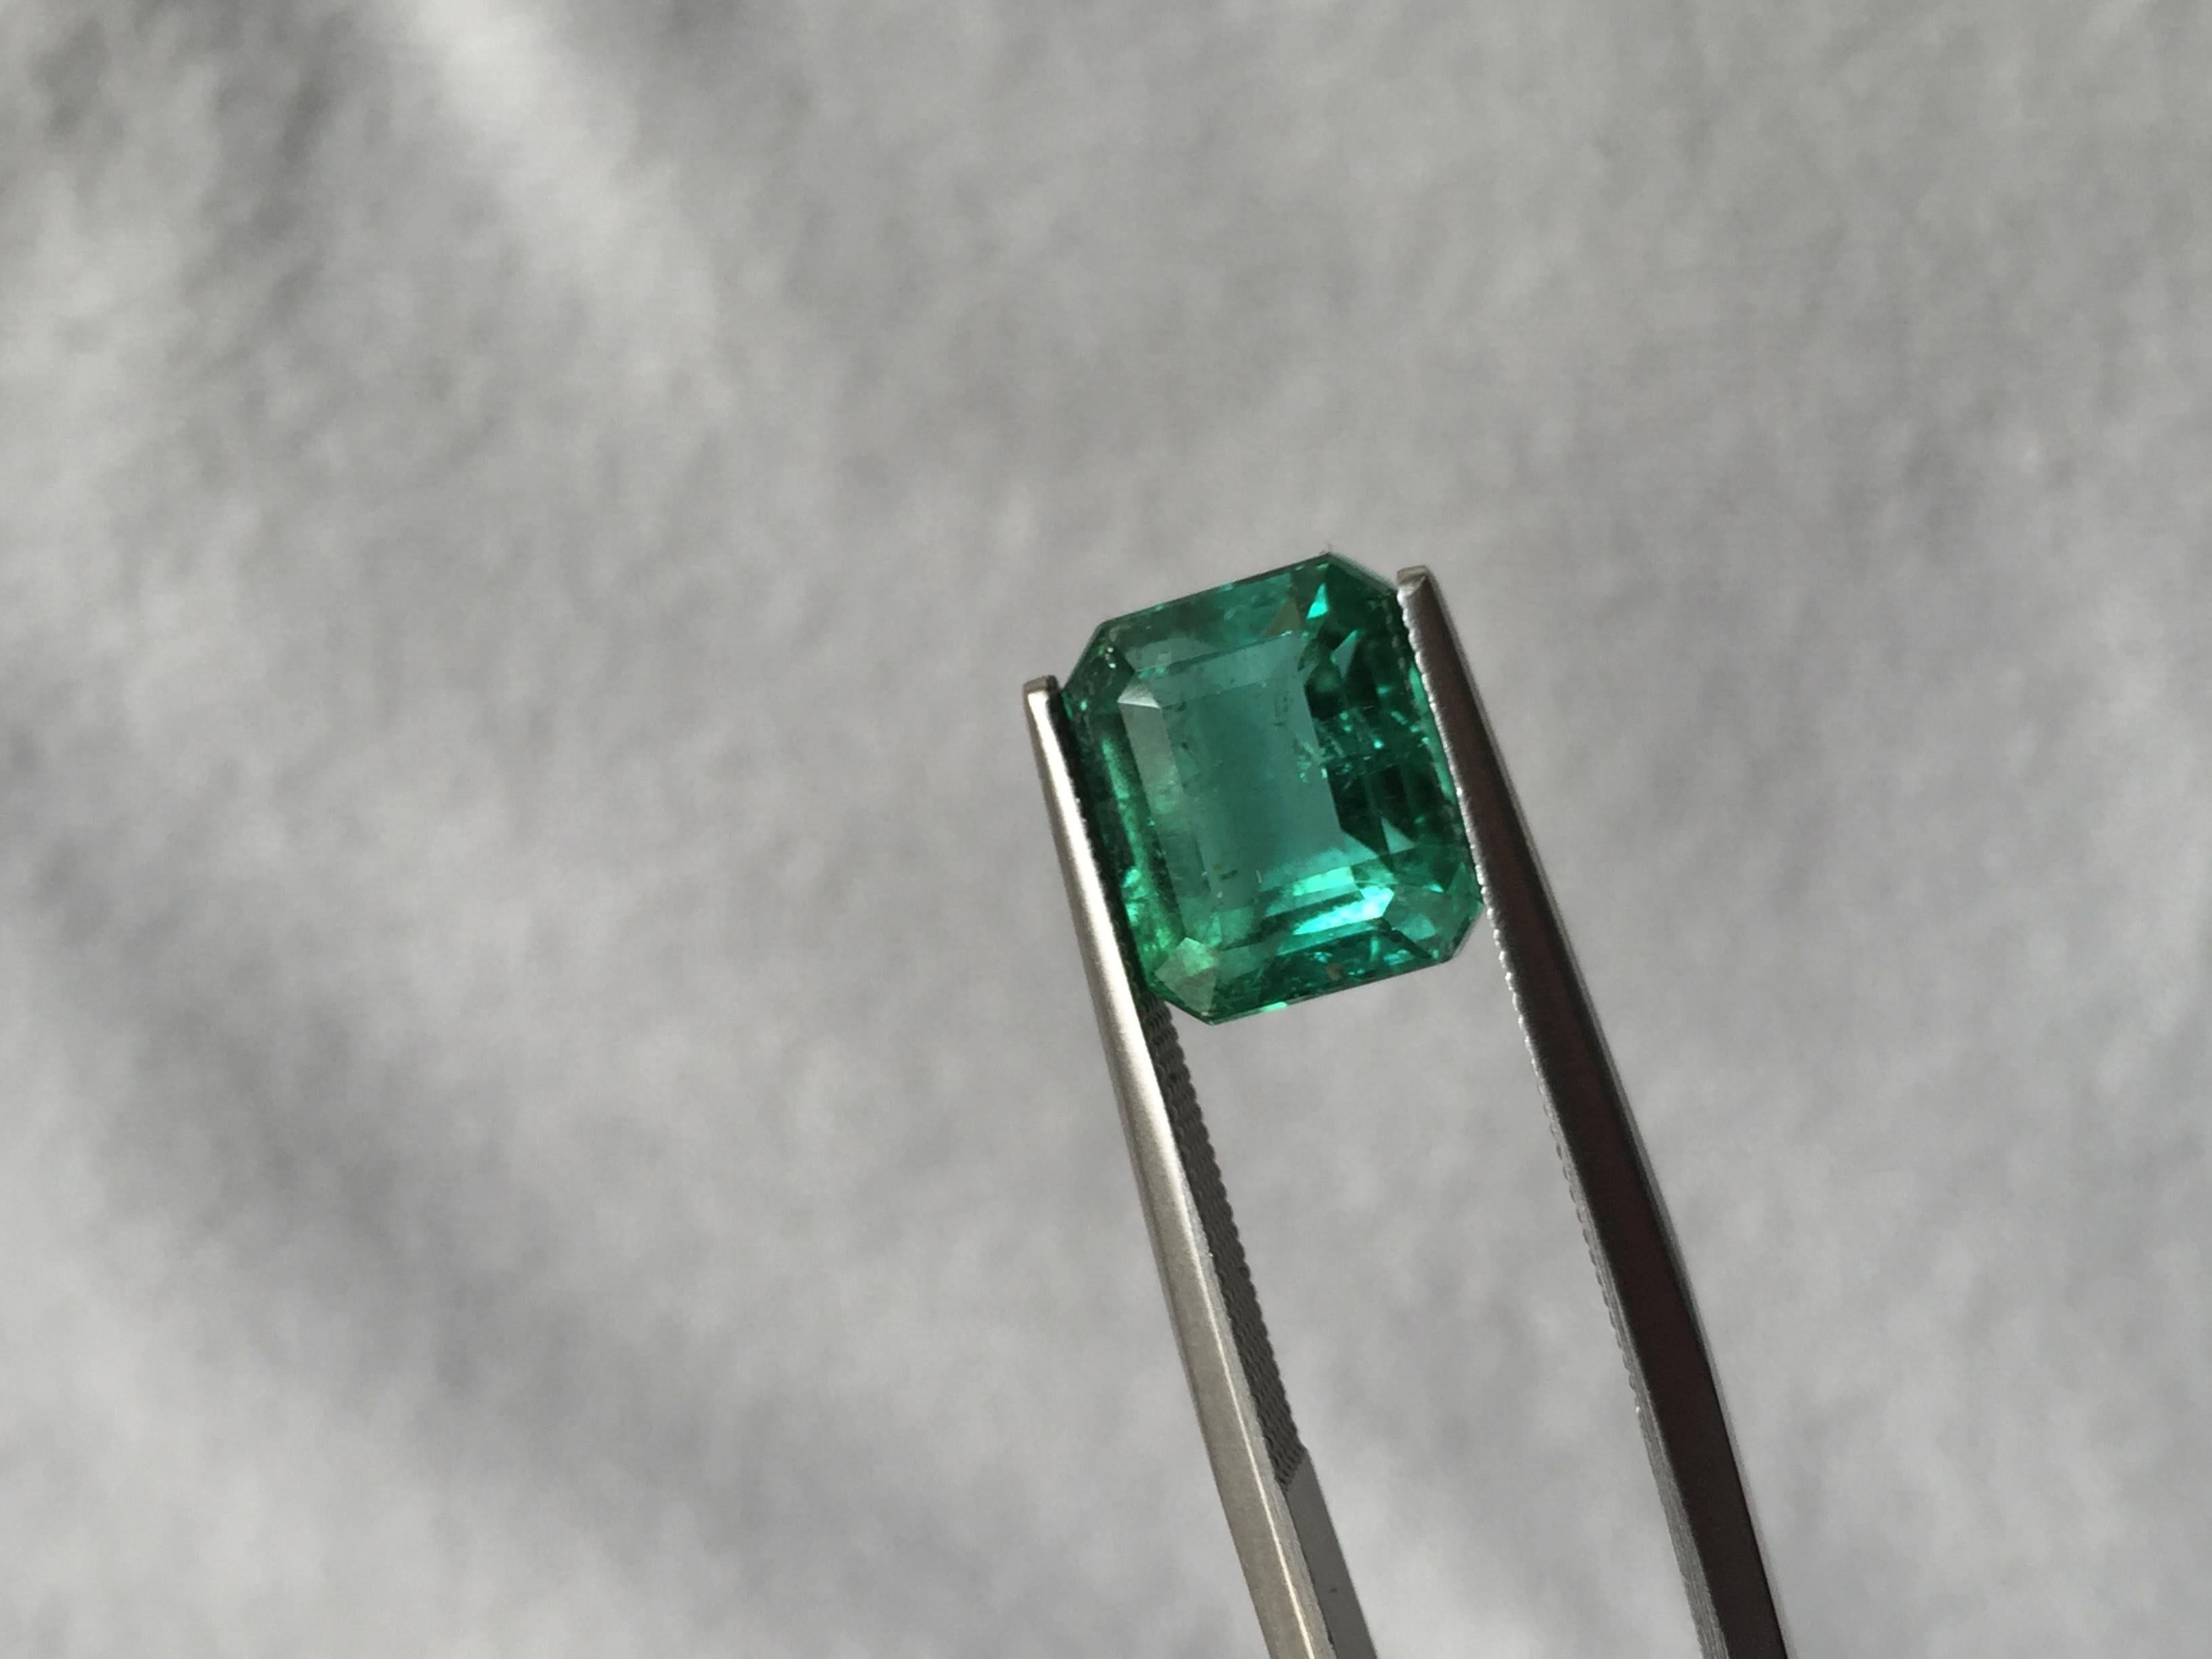 bluish green hue emerald